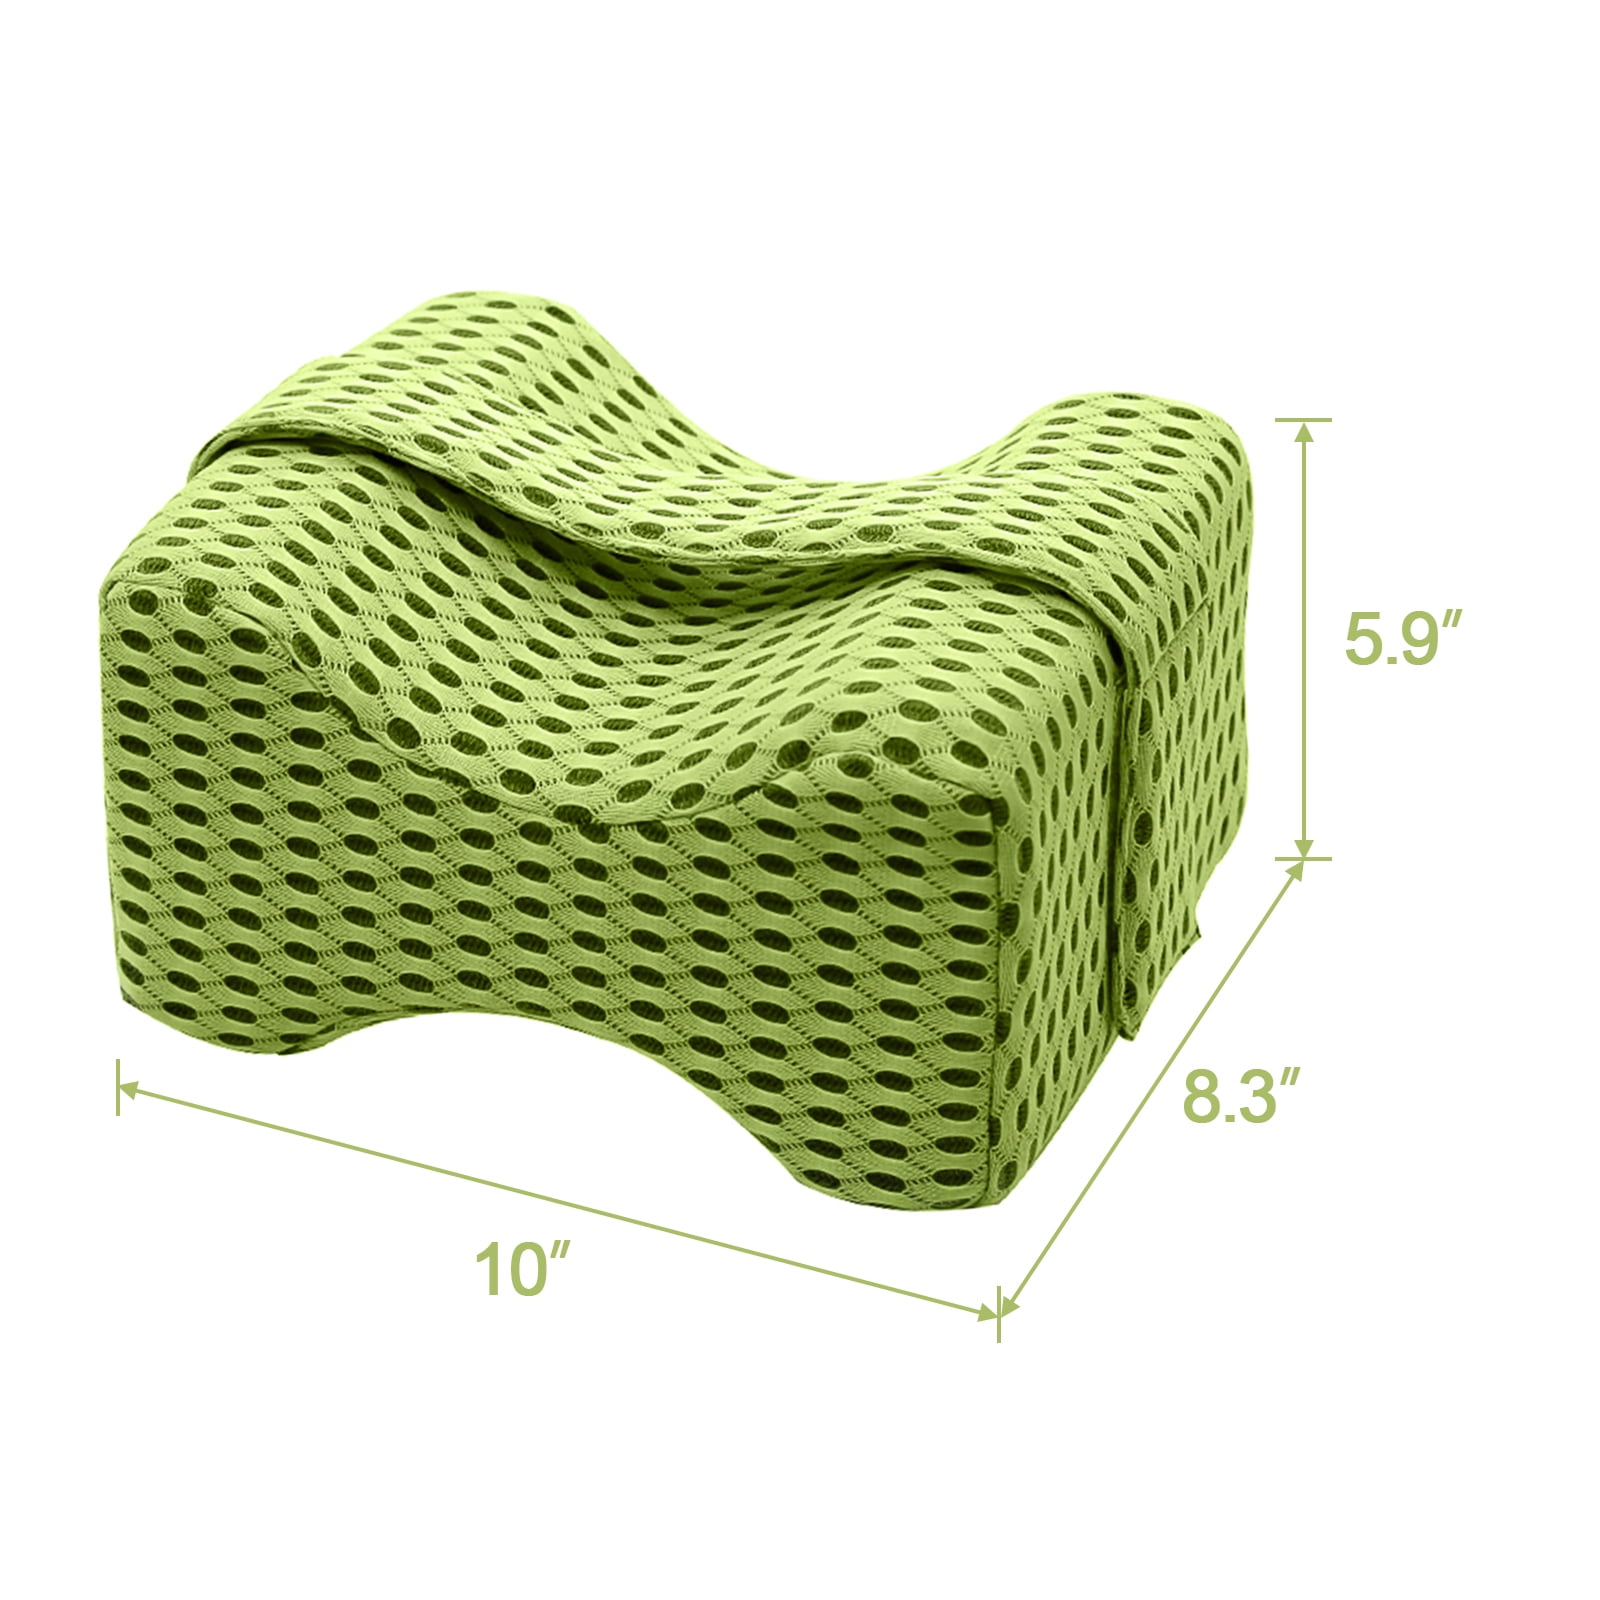 Knee Pillow w/Strap - New 3-Level Contour Memory Foam Leg